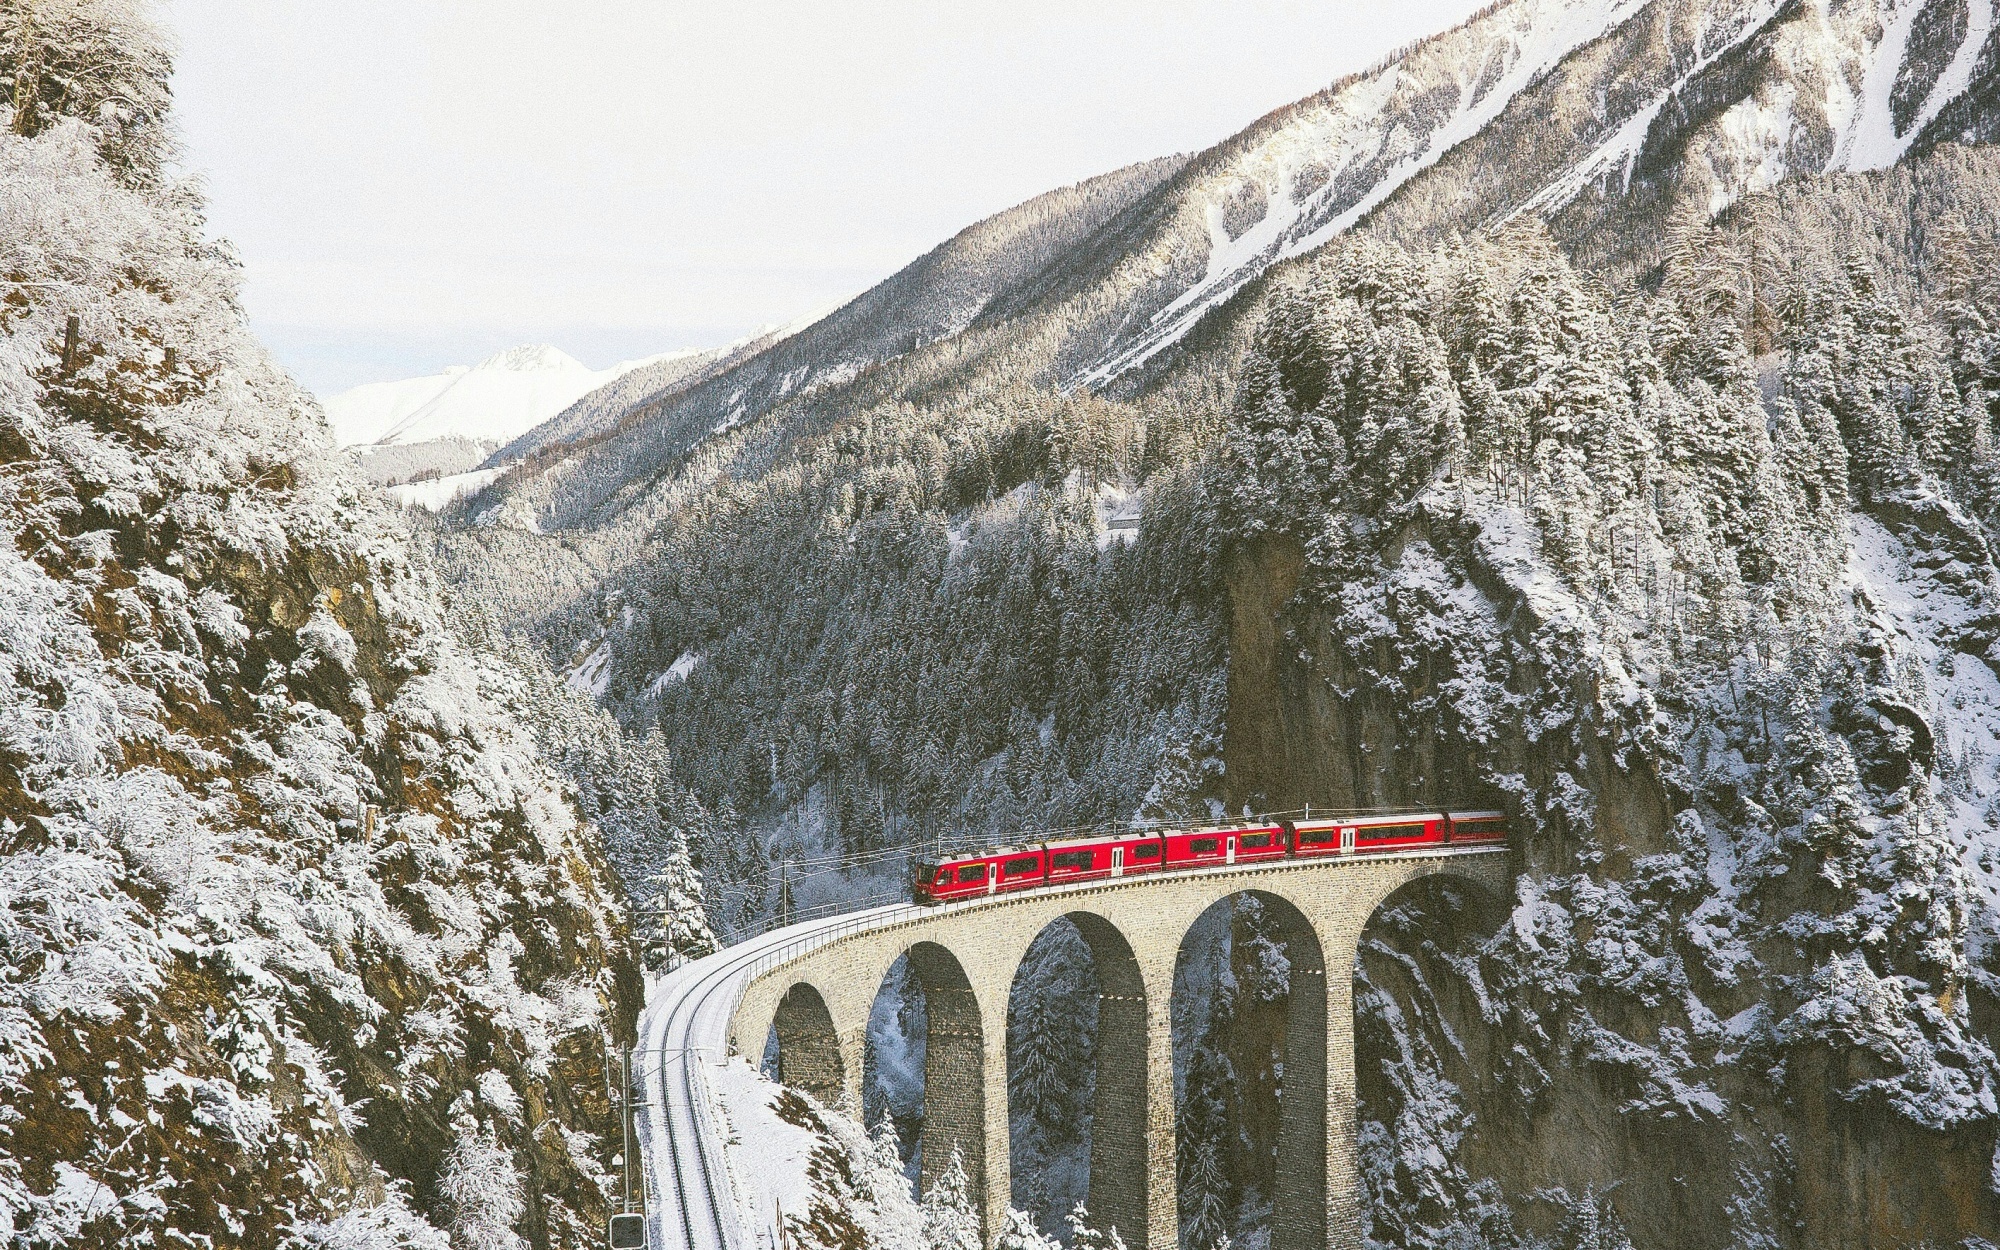 Mont Blanc Express